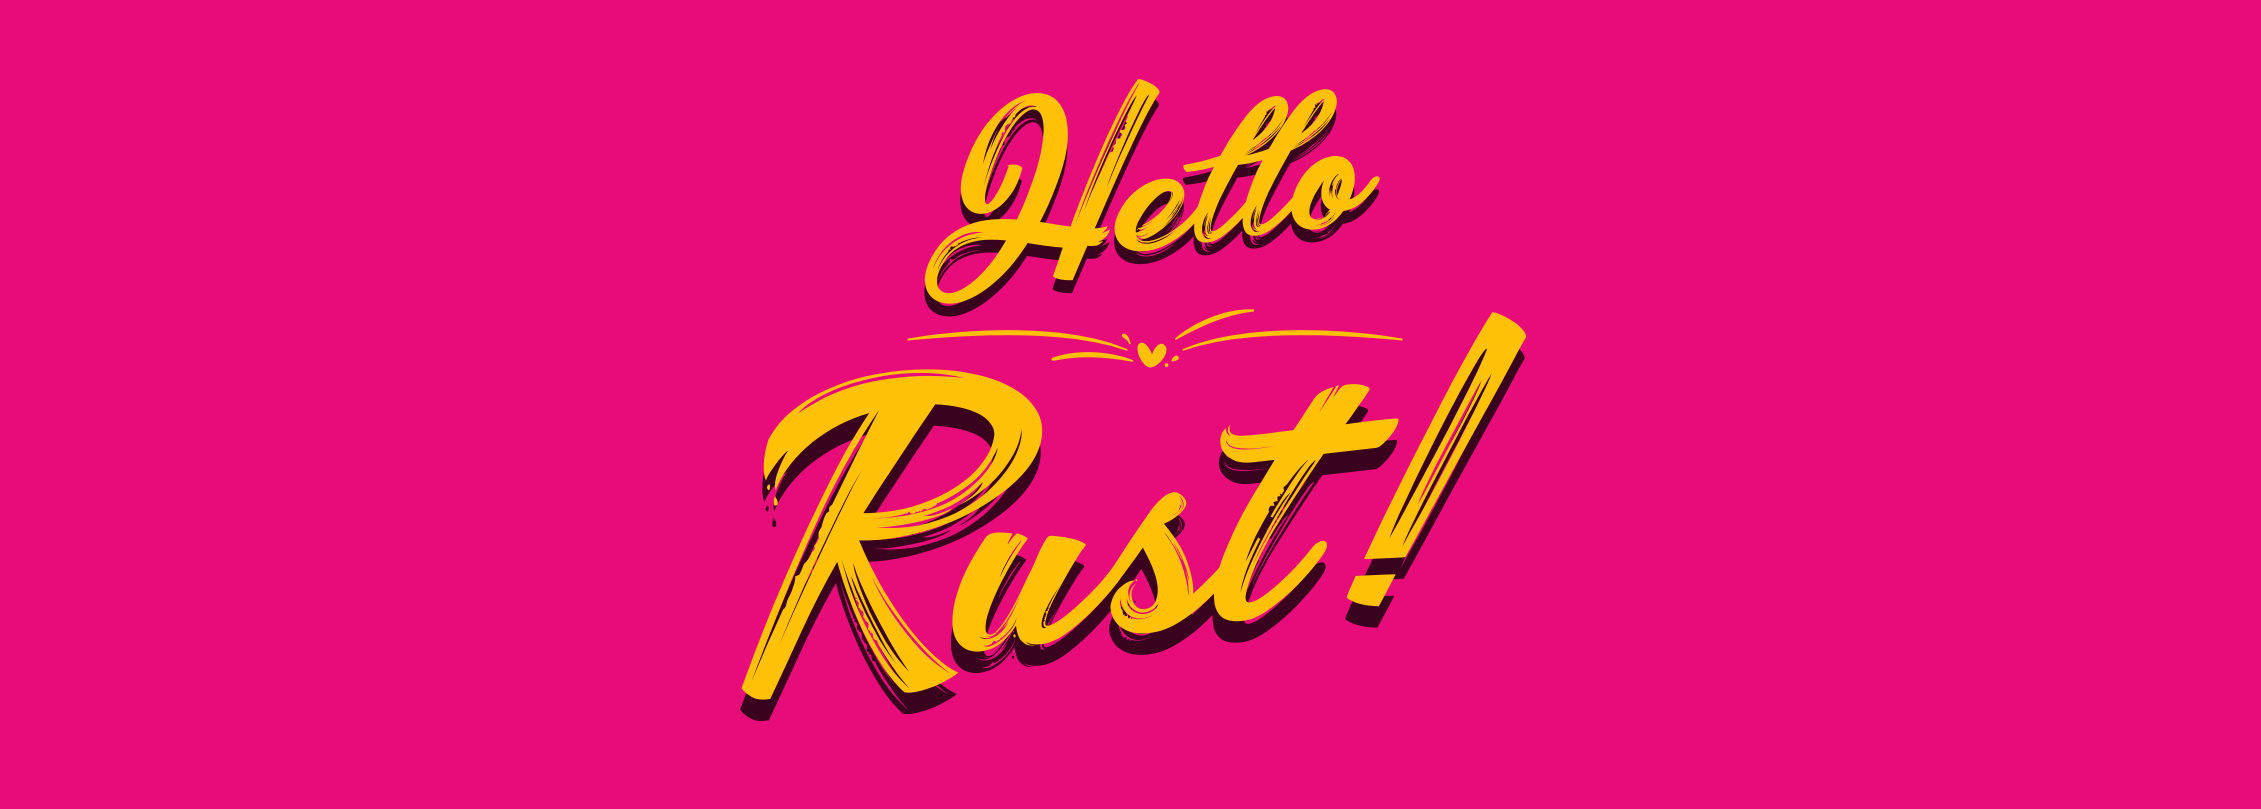 Hello Rust Show logo